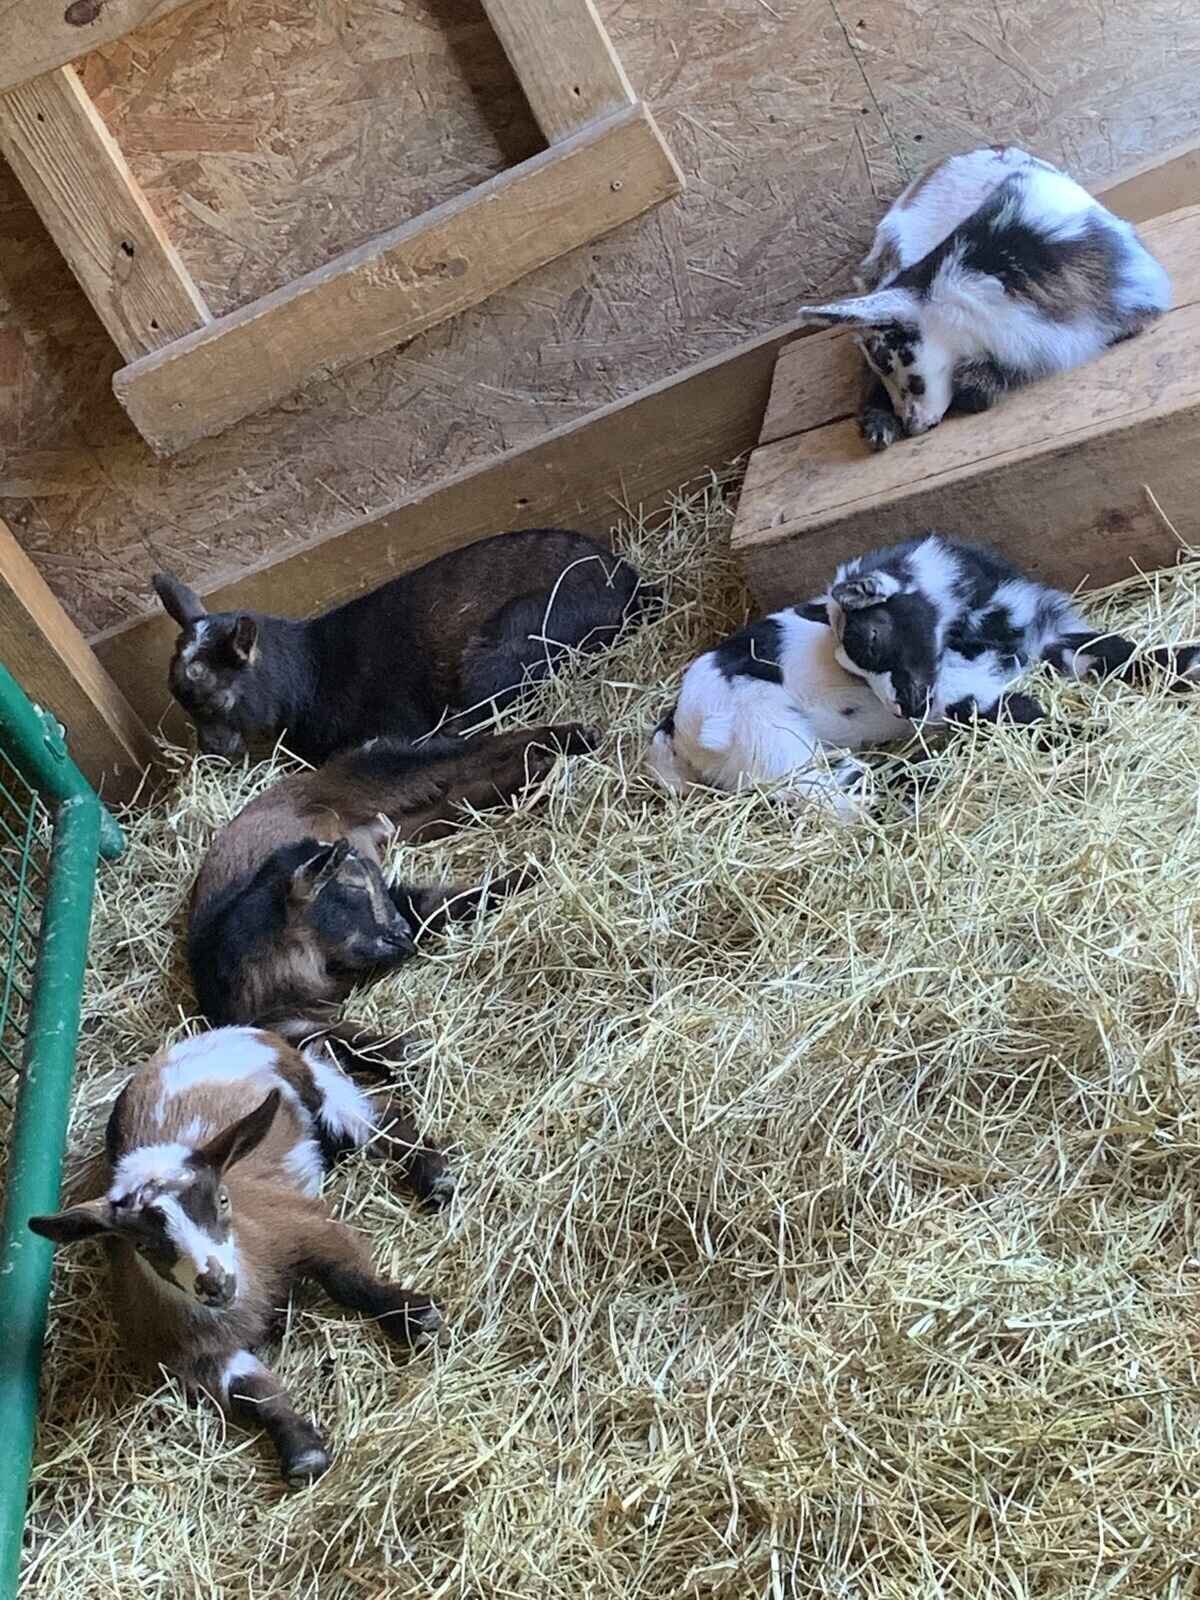 nigerian-dwarf-goat-kids-napping-in-barn